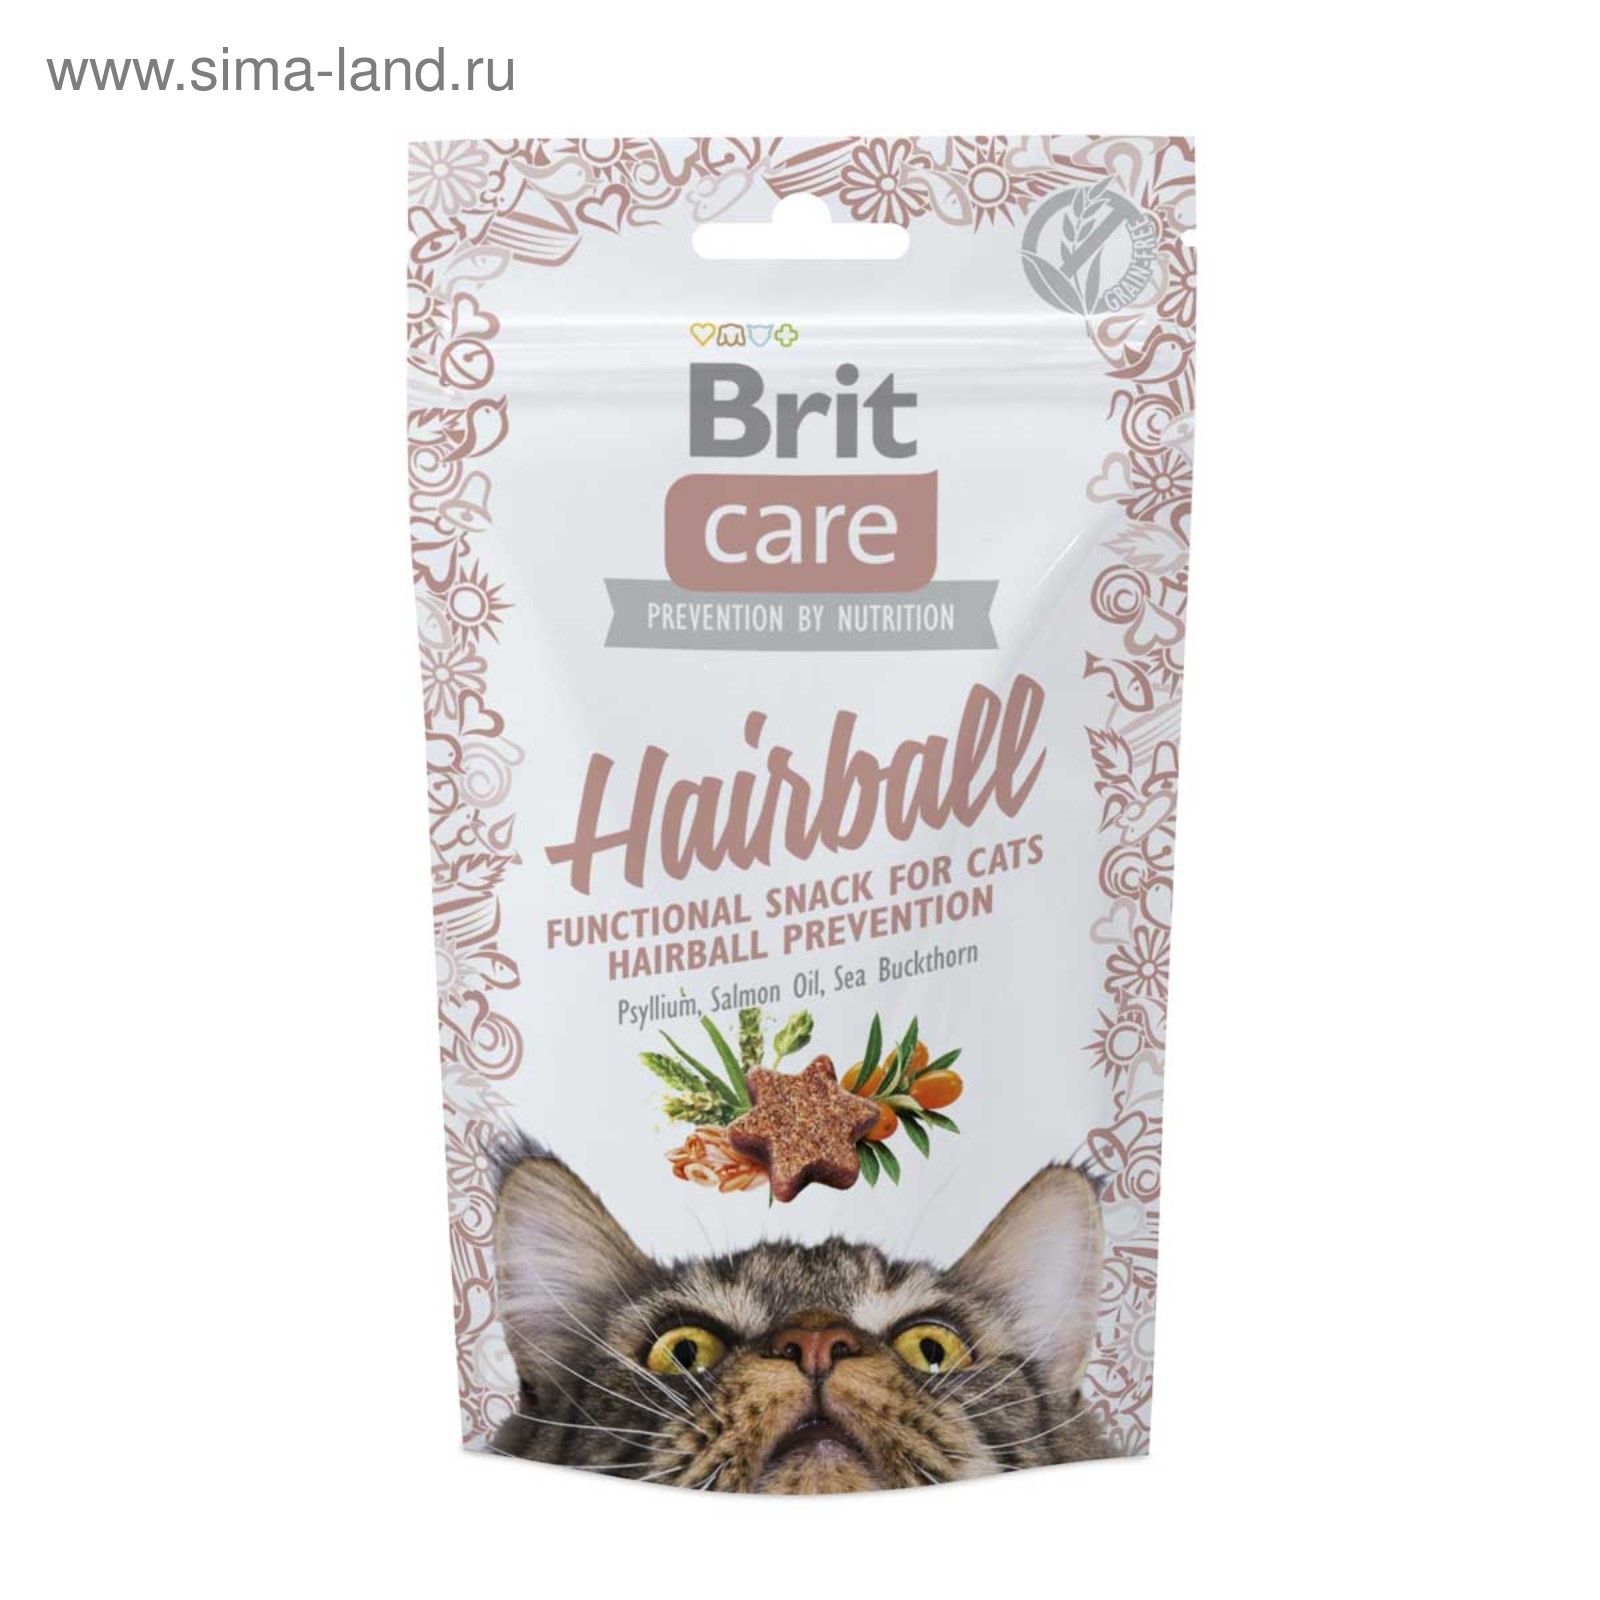 Care Hairball лакомство для кошек для вывода комков шерсти, Brit